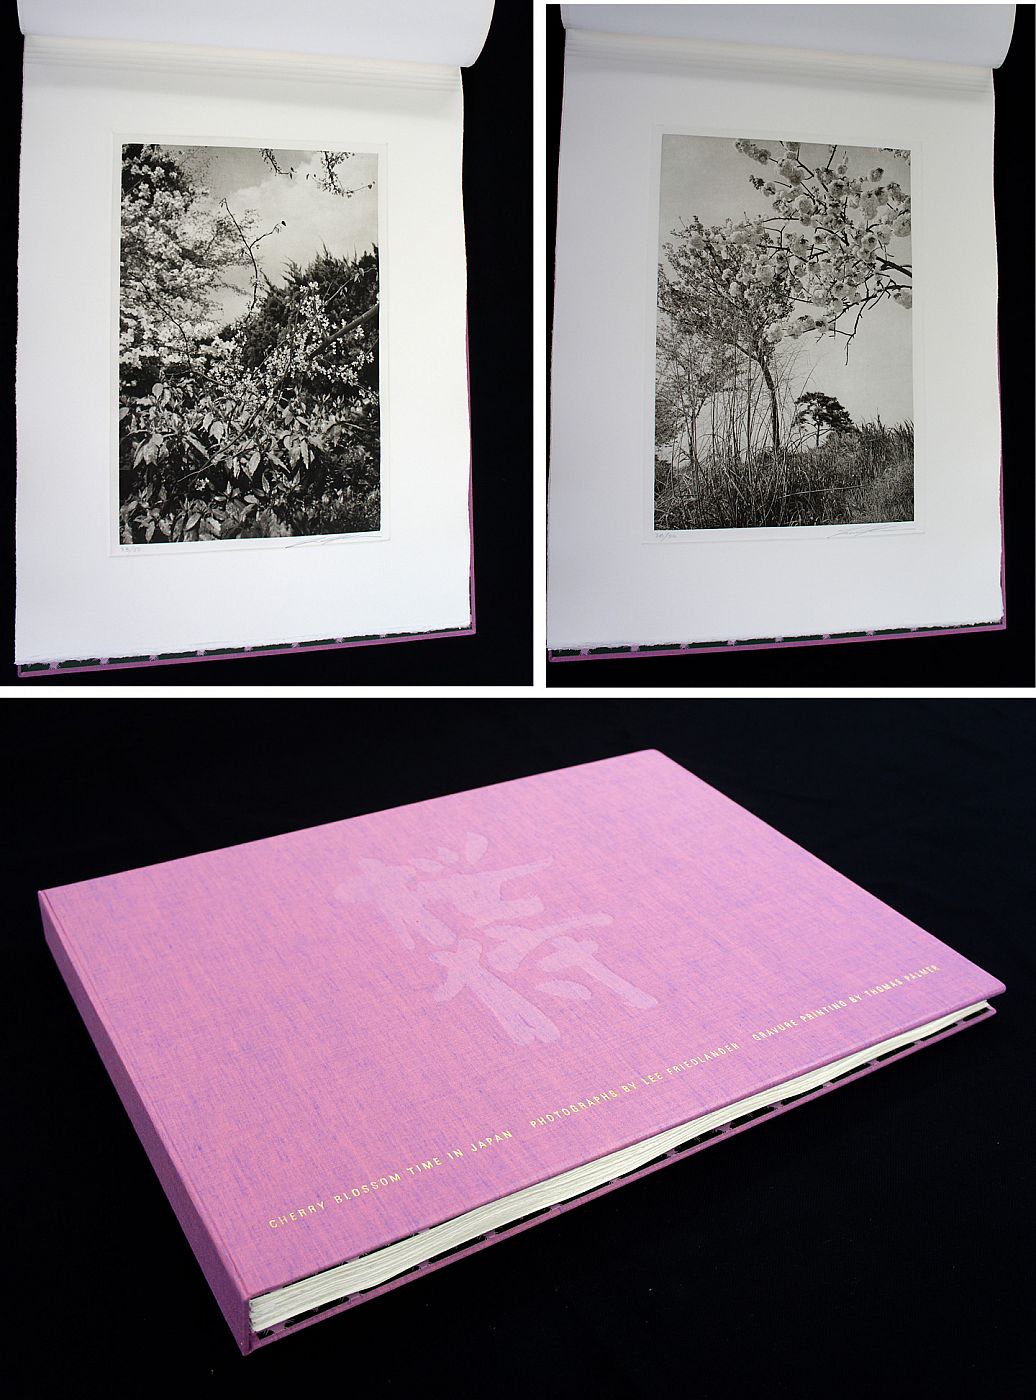 Lee Friedlander: Cherry Blossom Time in Japan Special Limited Edition Book  of 25 Photogravure Prints by Lee FRIEDLANDER on Vincent Borrelli, 